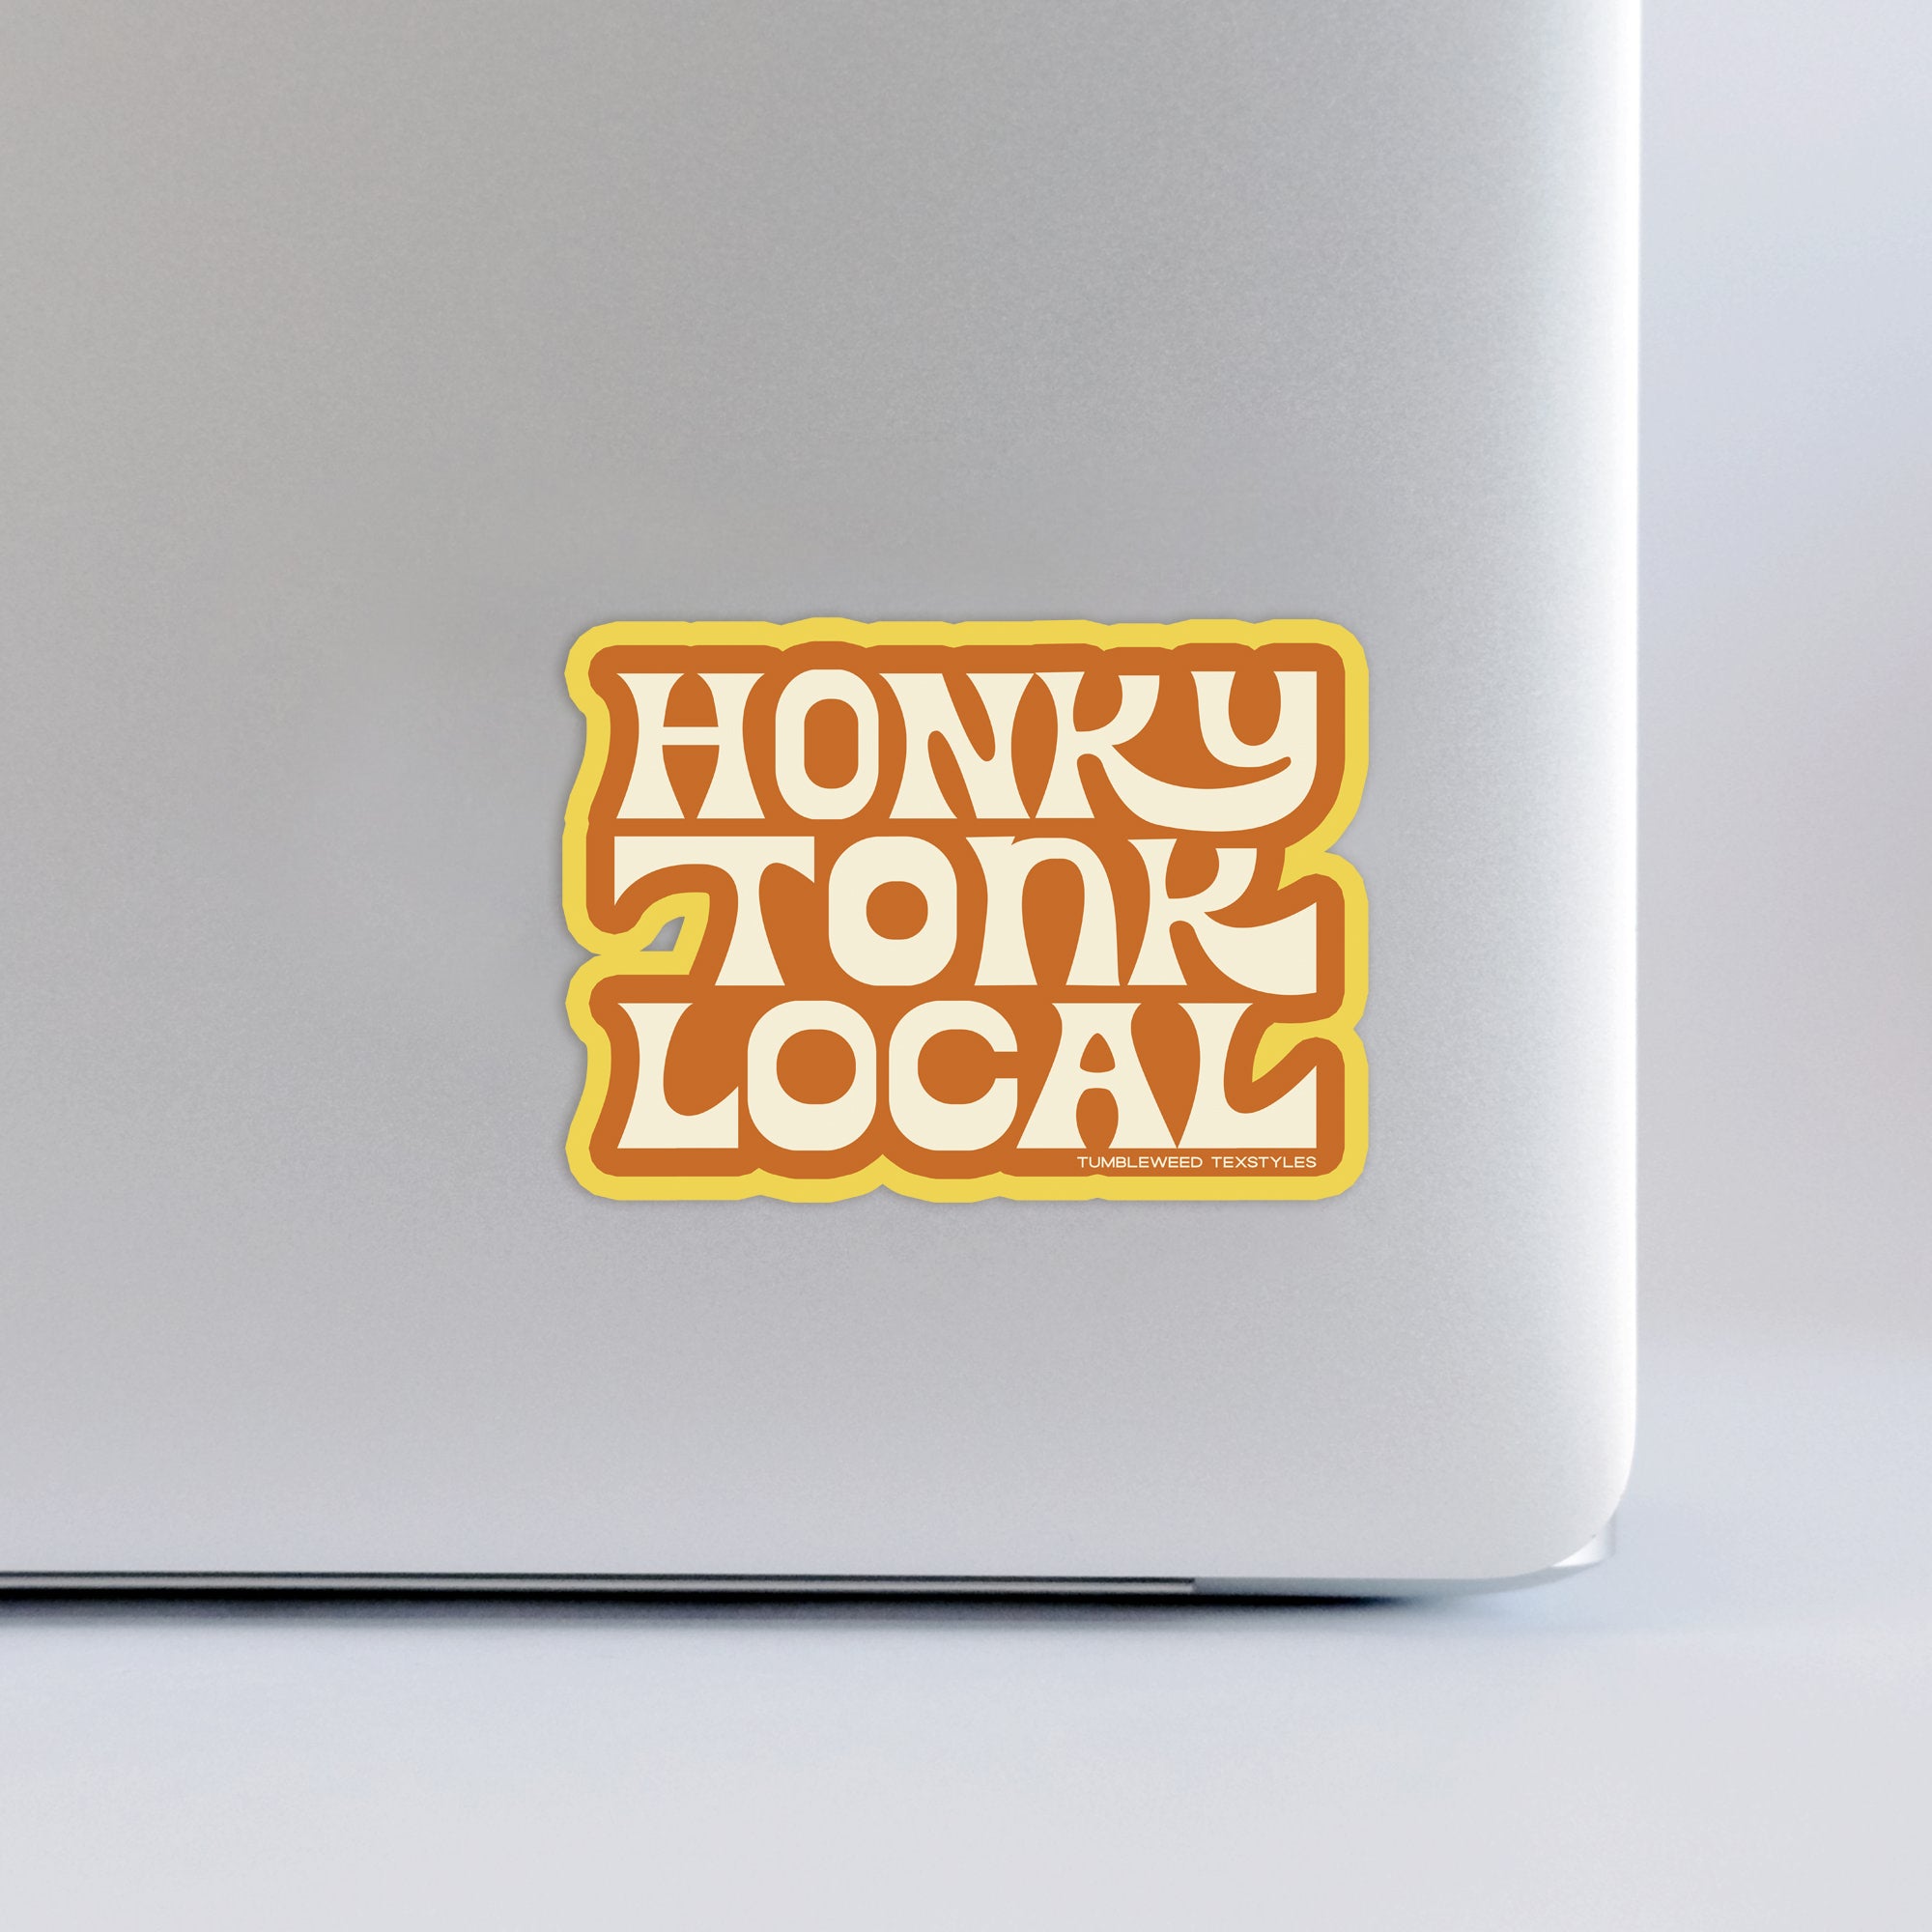 Honky Tonk Local Sticker